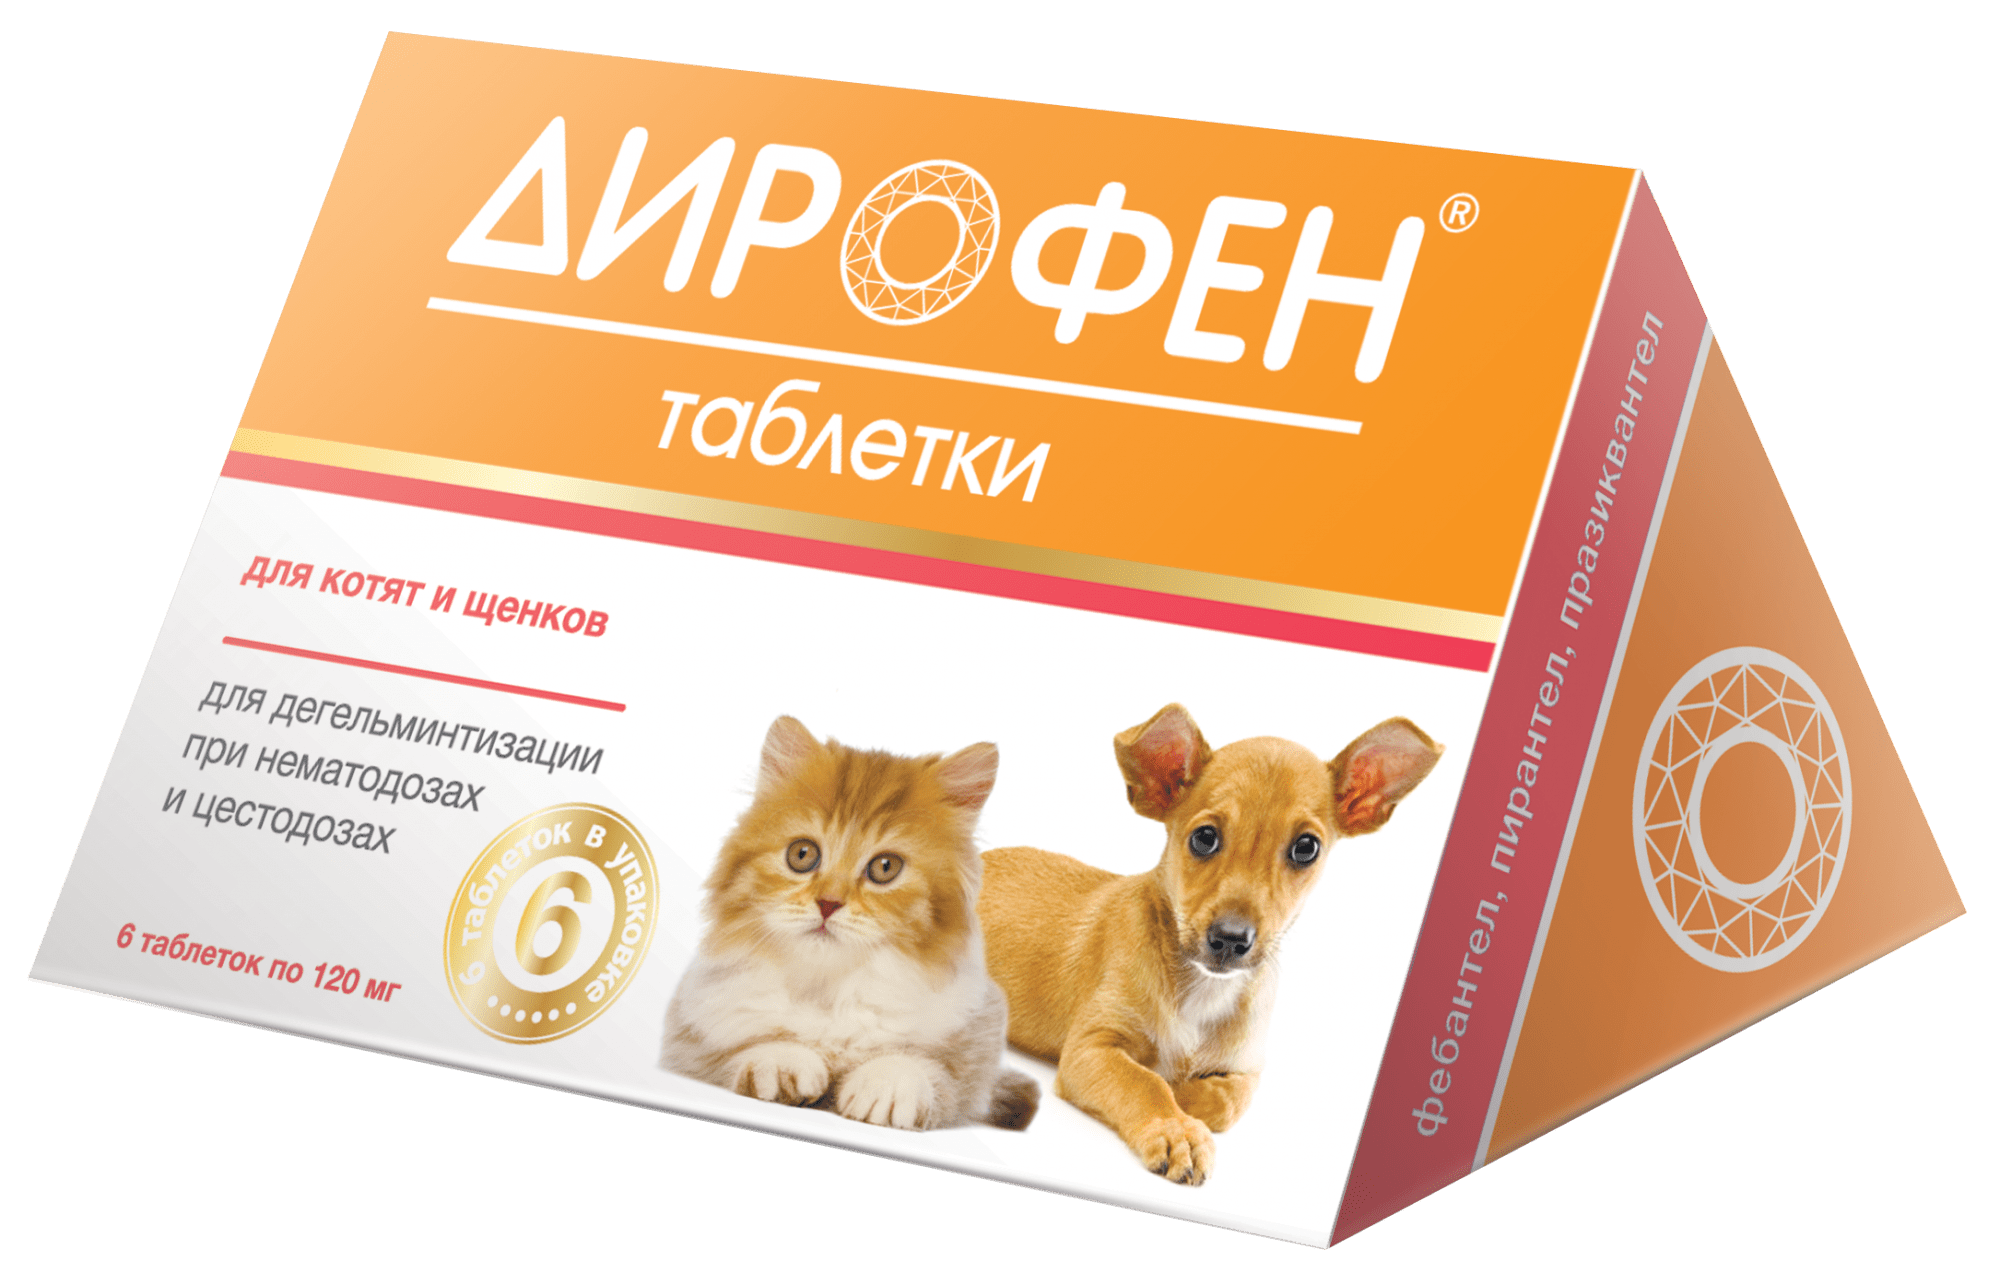 Антигельминтик для котят и щенков apicenna Дирофен, 120 мг, 6 табл